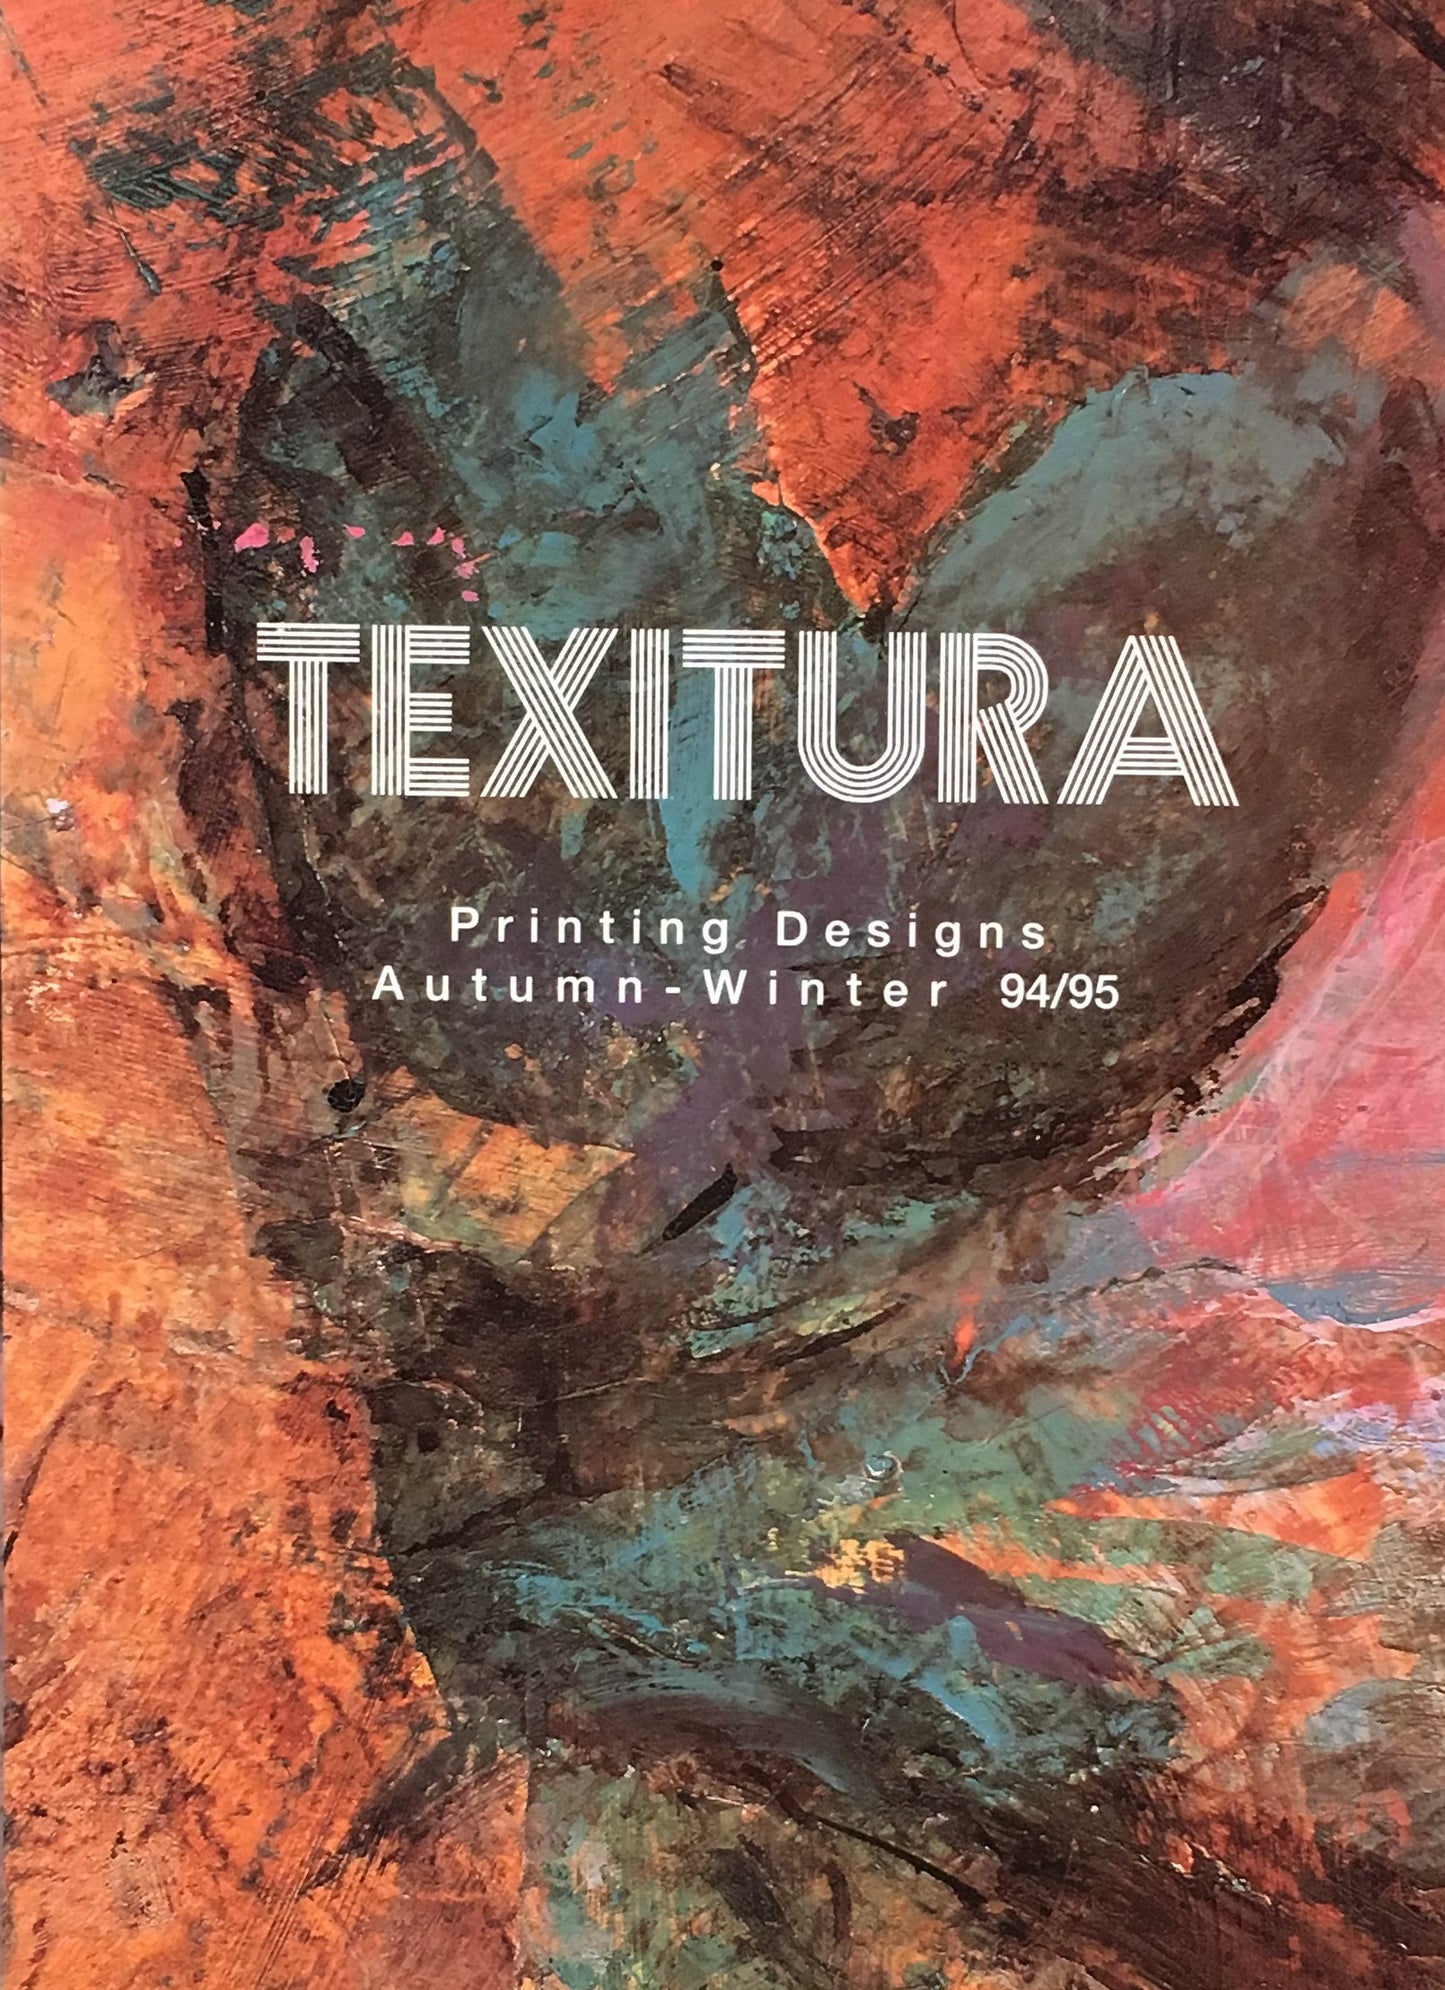 Texitura Printing Designs Autumn-Winter 94/95